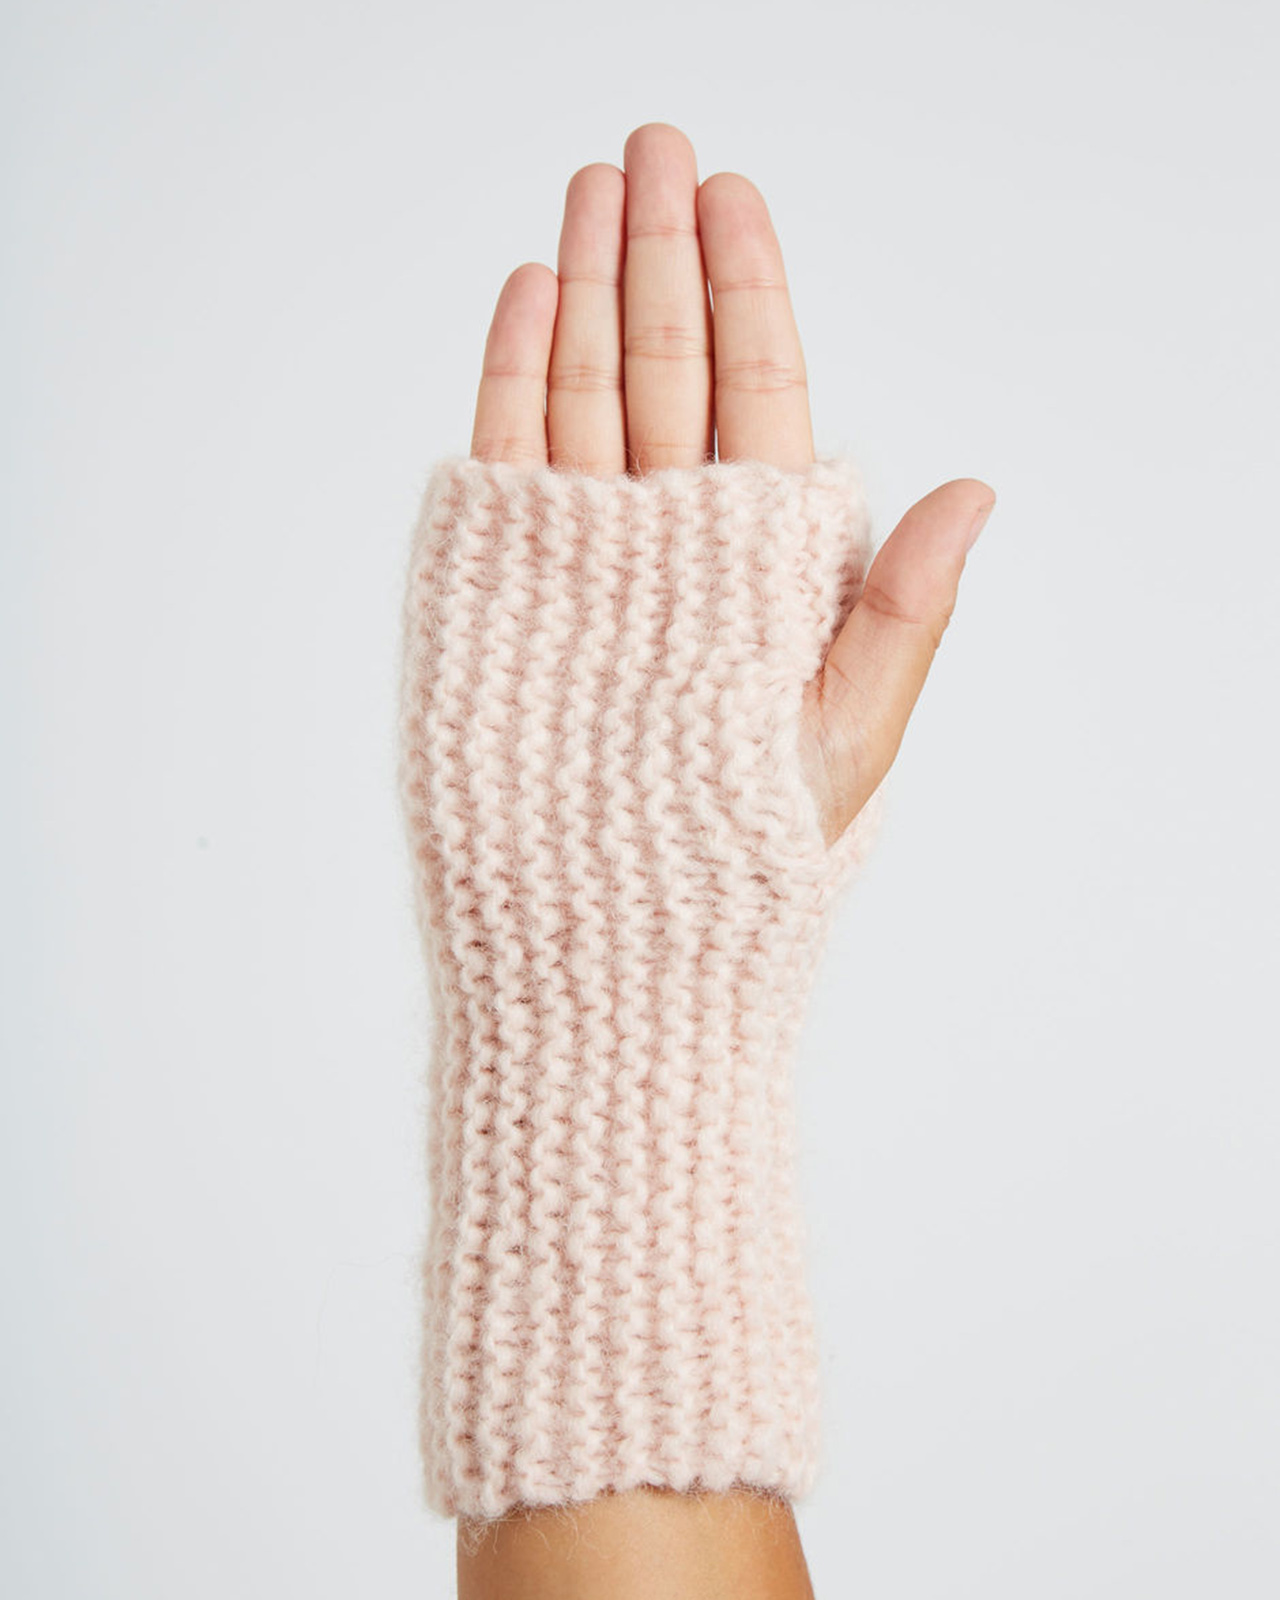 【SHINING STAR MITTENS / PATTERN SET】初心者にもおすすめの指なし手袋の編み物パターン